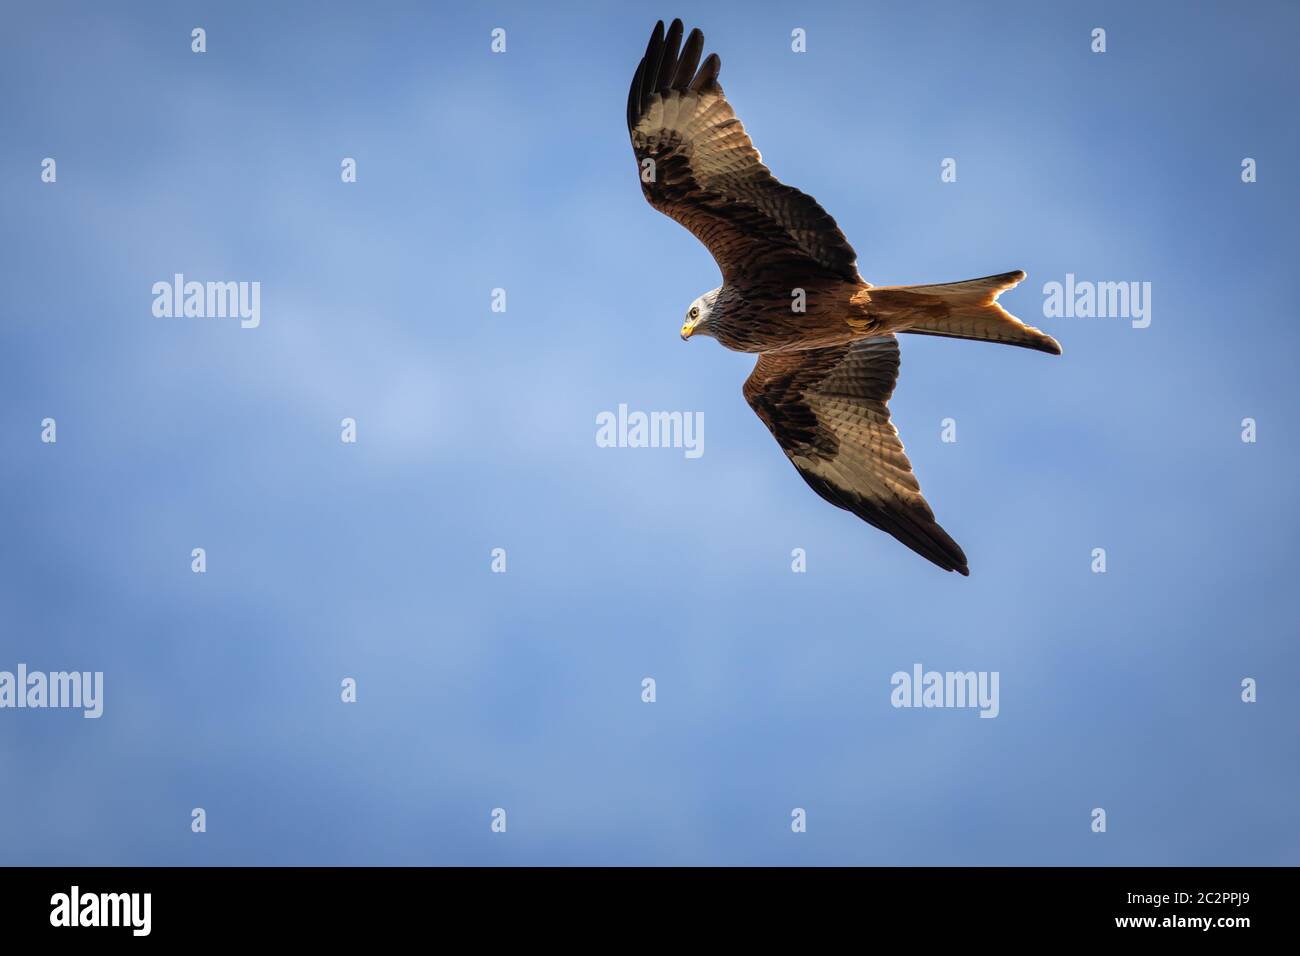 Red kite (Milvus milvus) in flight against blue sky Stock Photo